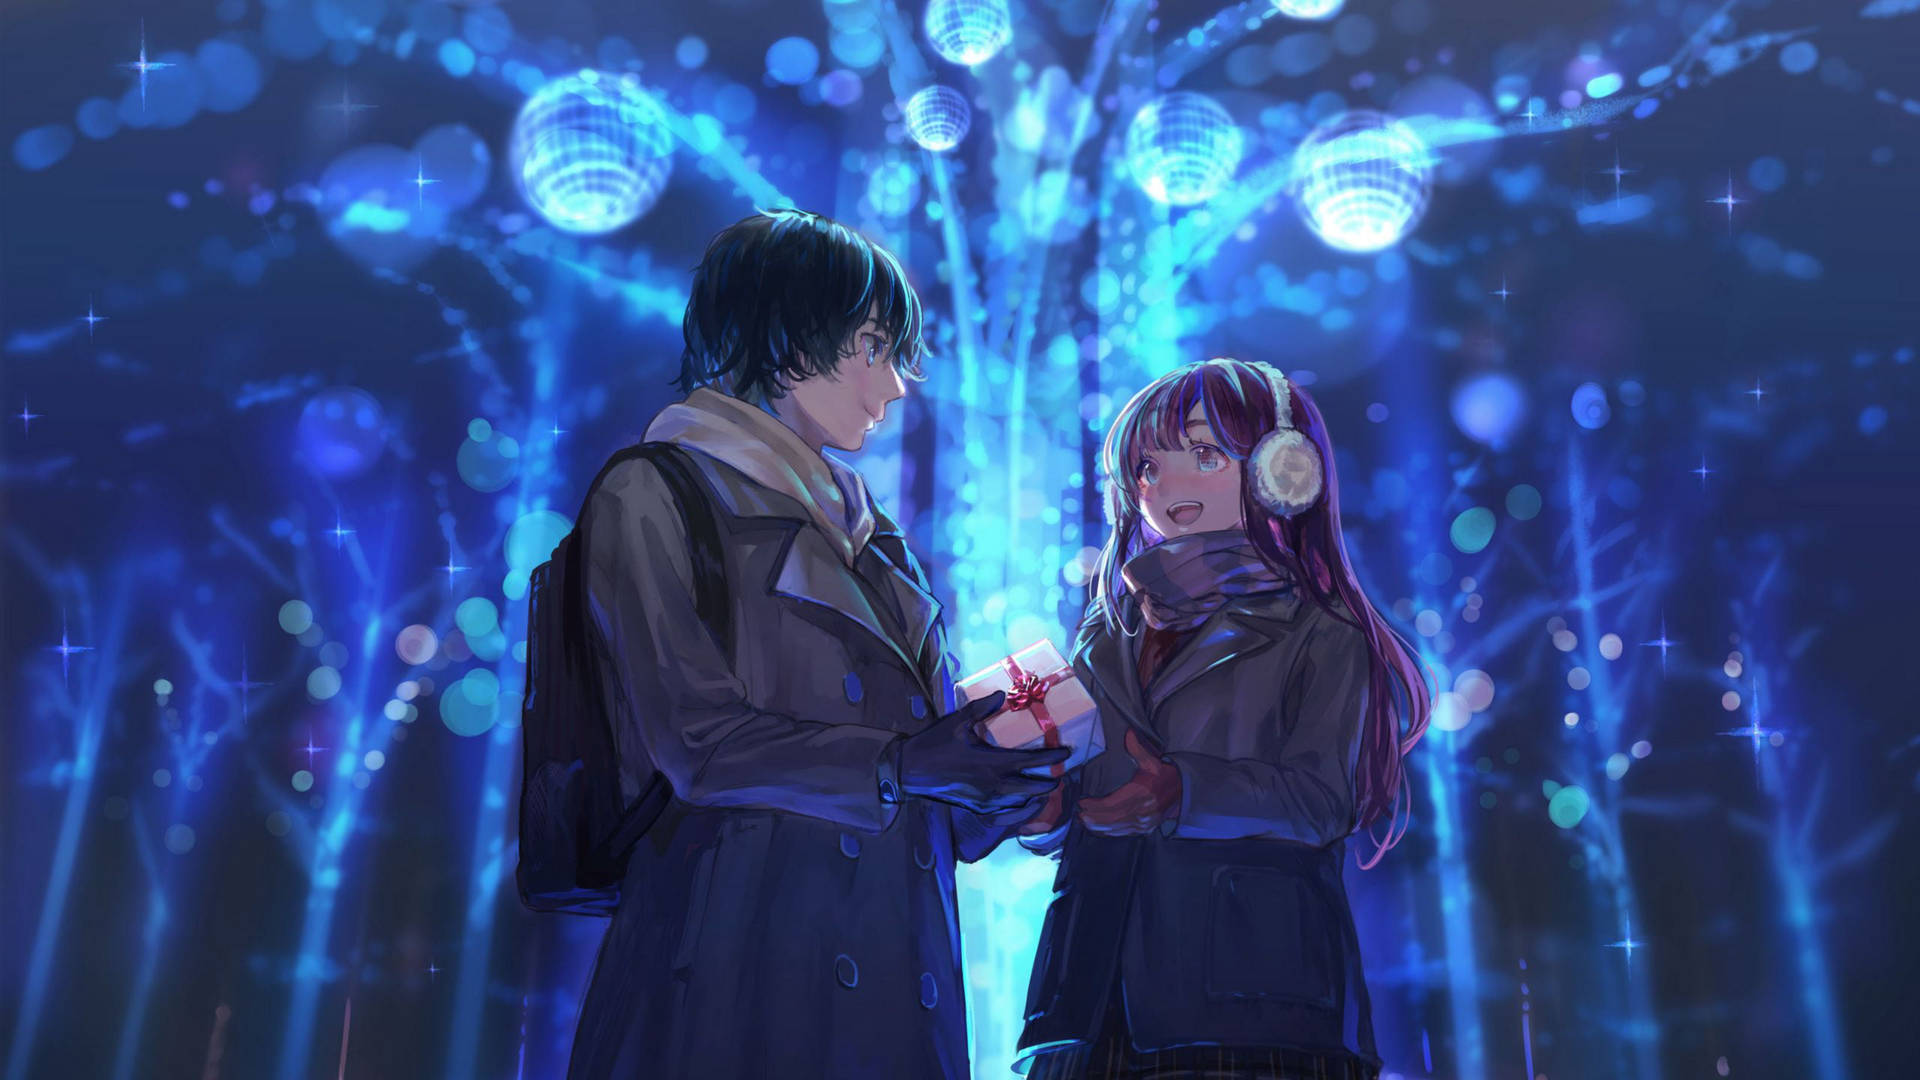 Cute Anime Couple Gift Wallpaper